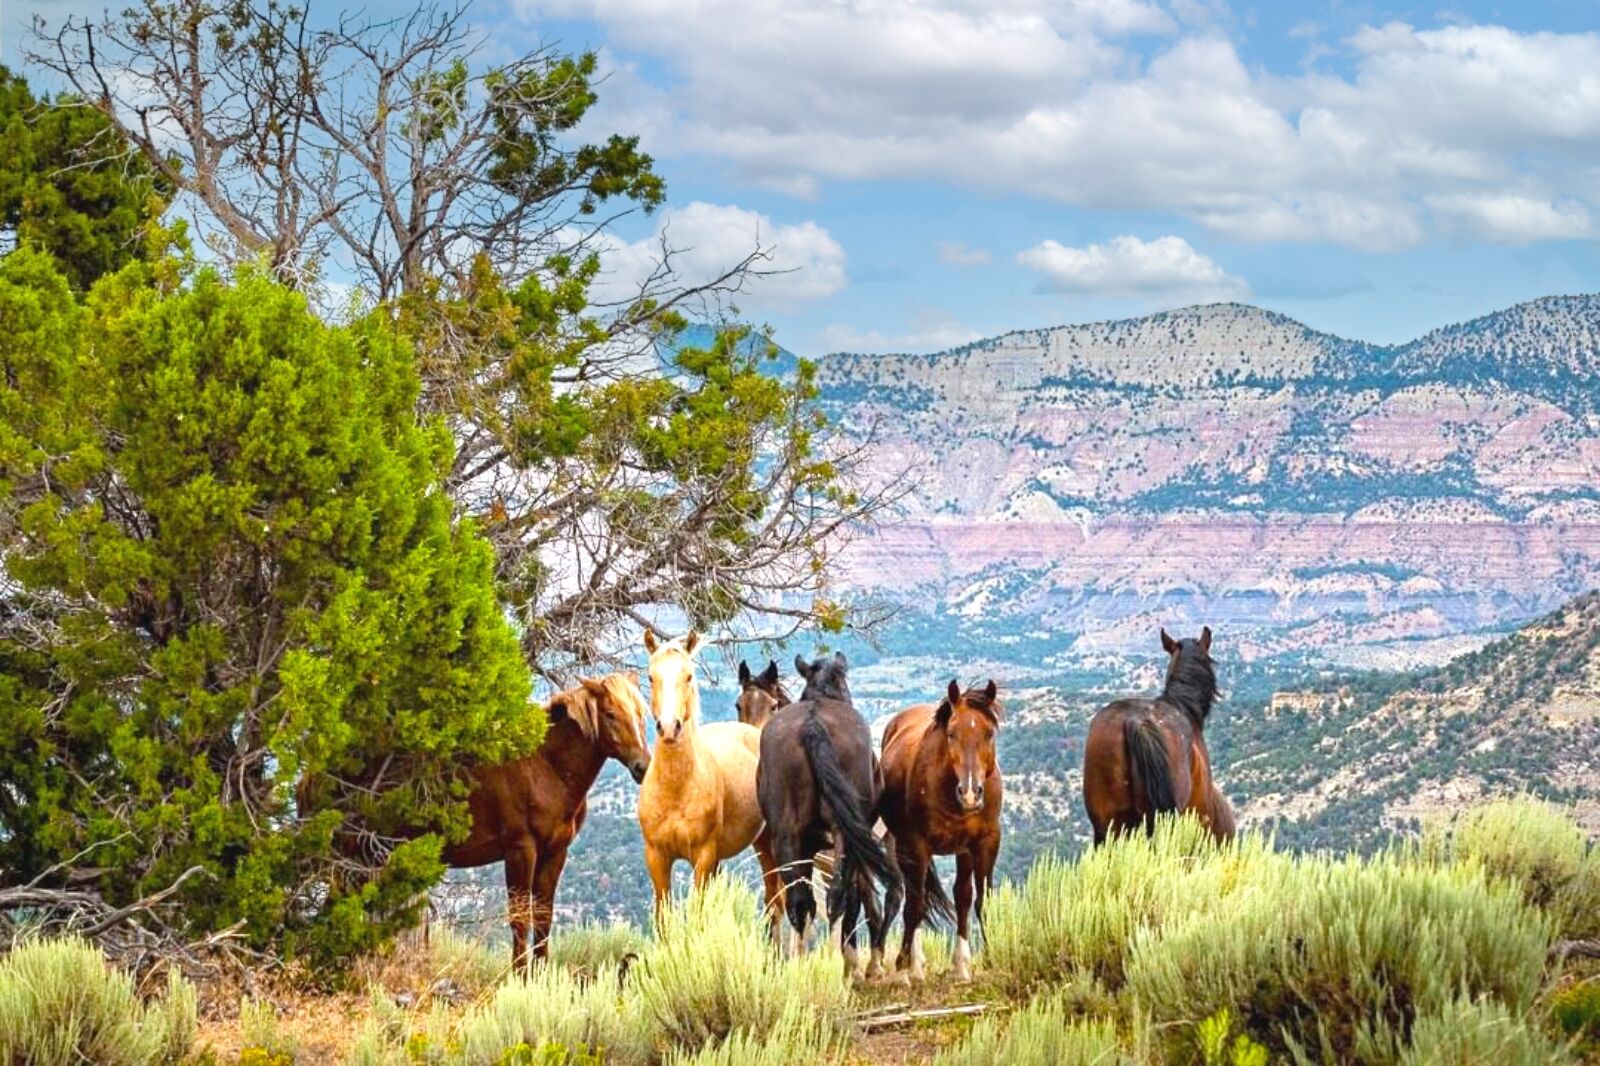 Wild horses in Colorado in sunshine